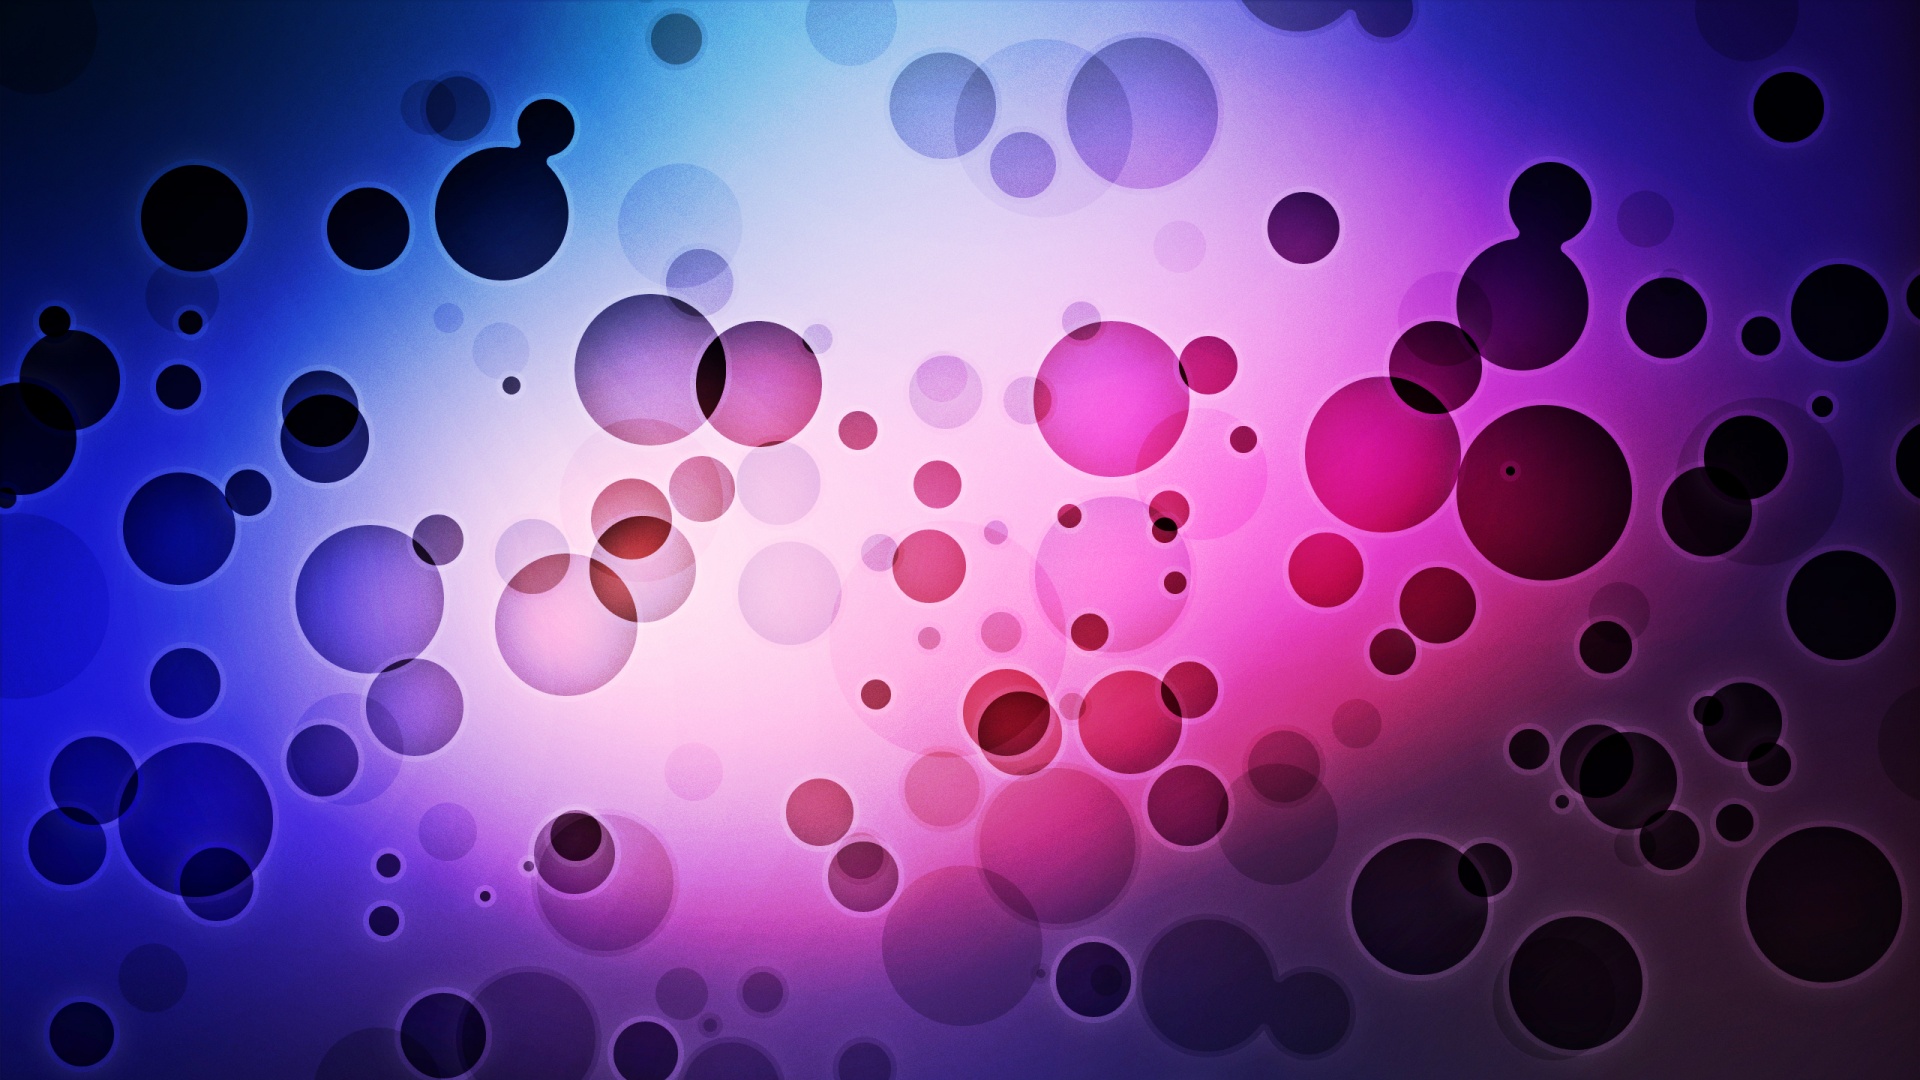 Violet Circles | Full HD Desktop Wallpapers 1080p